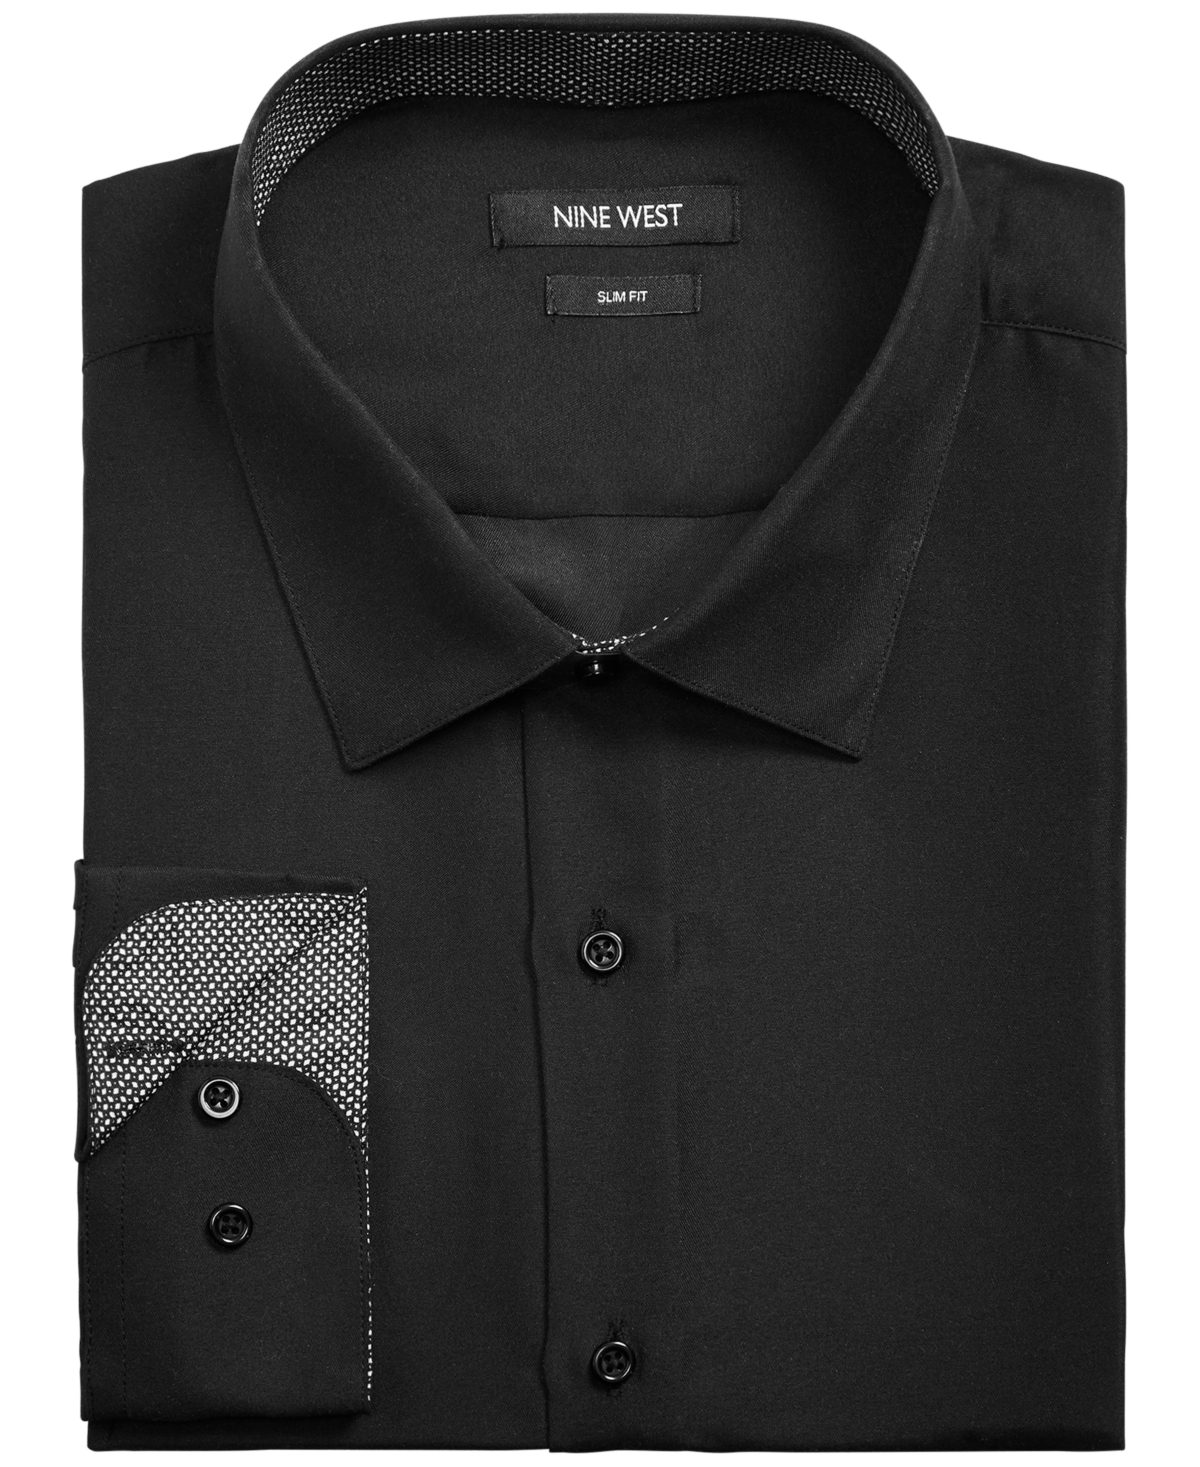 Men's Slim-Fit Performance Stretch Solid Dress Shirt - Black/Ehite